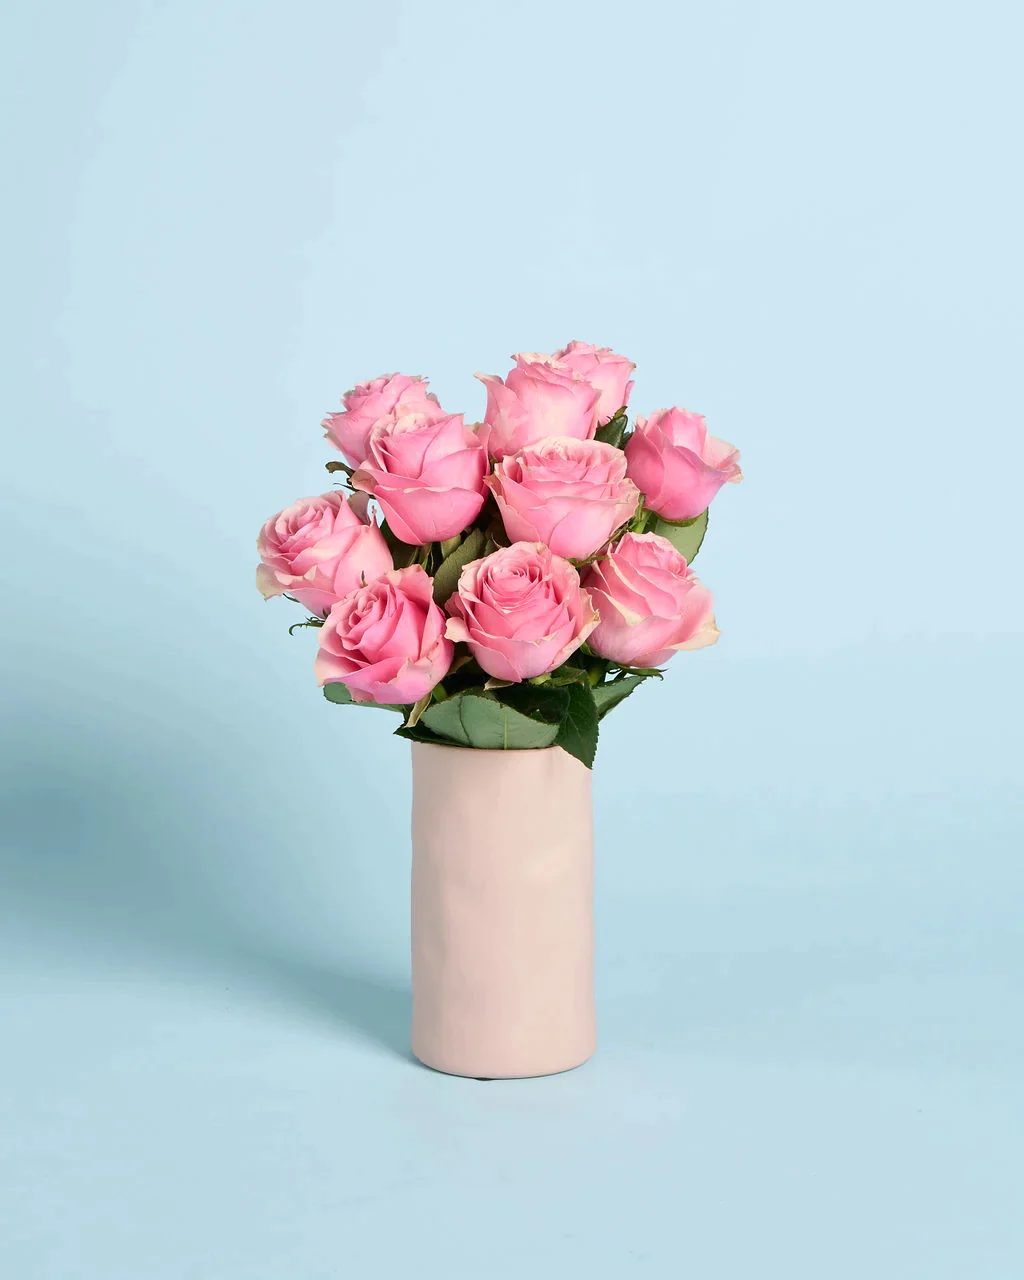 Roses + Vase